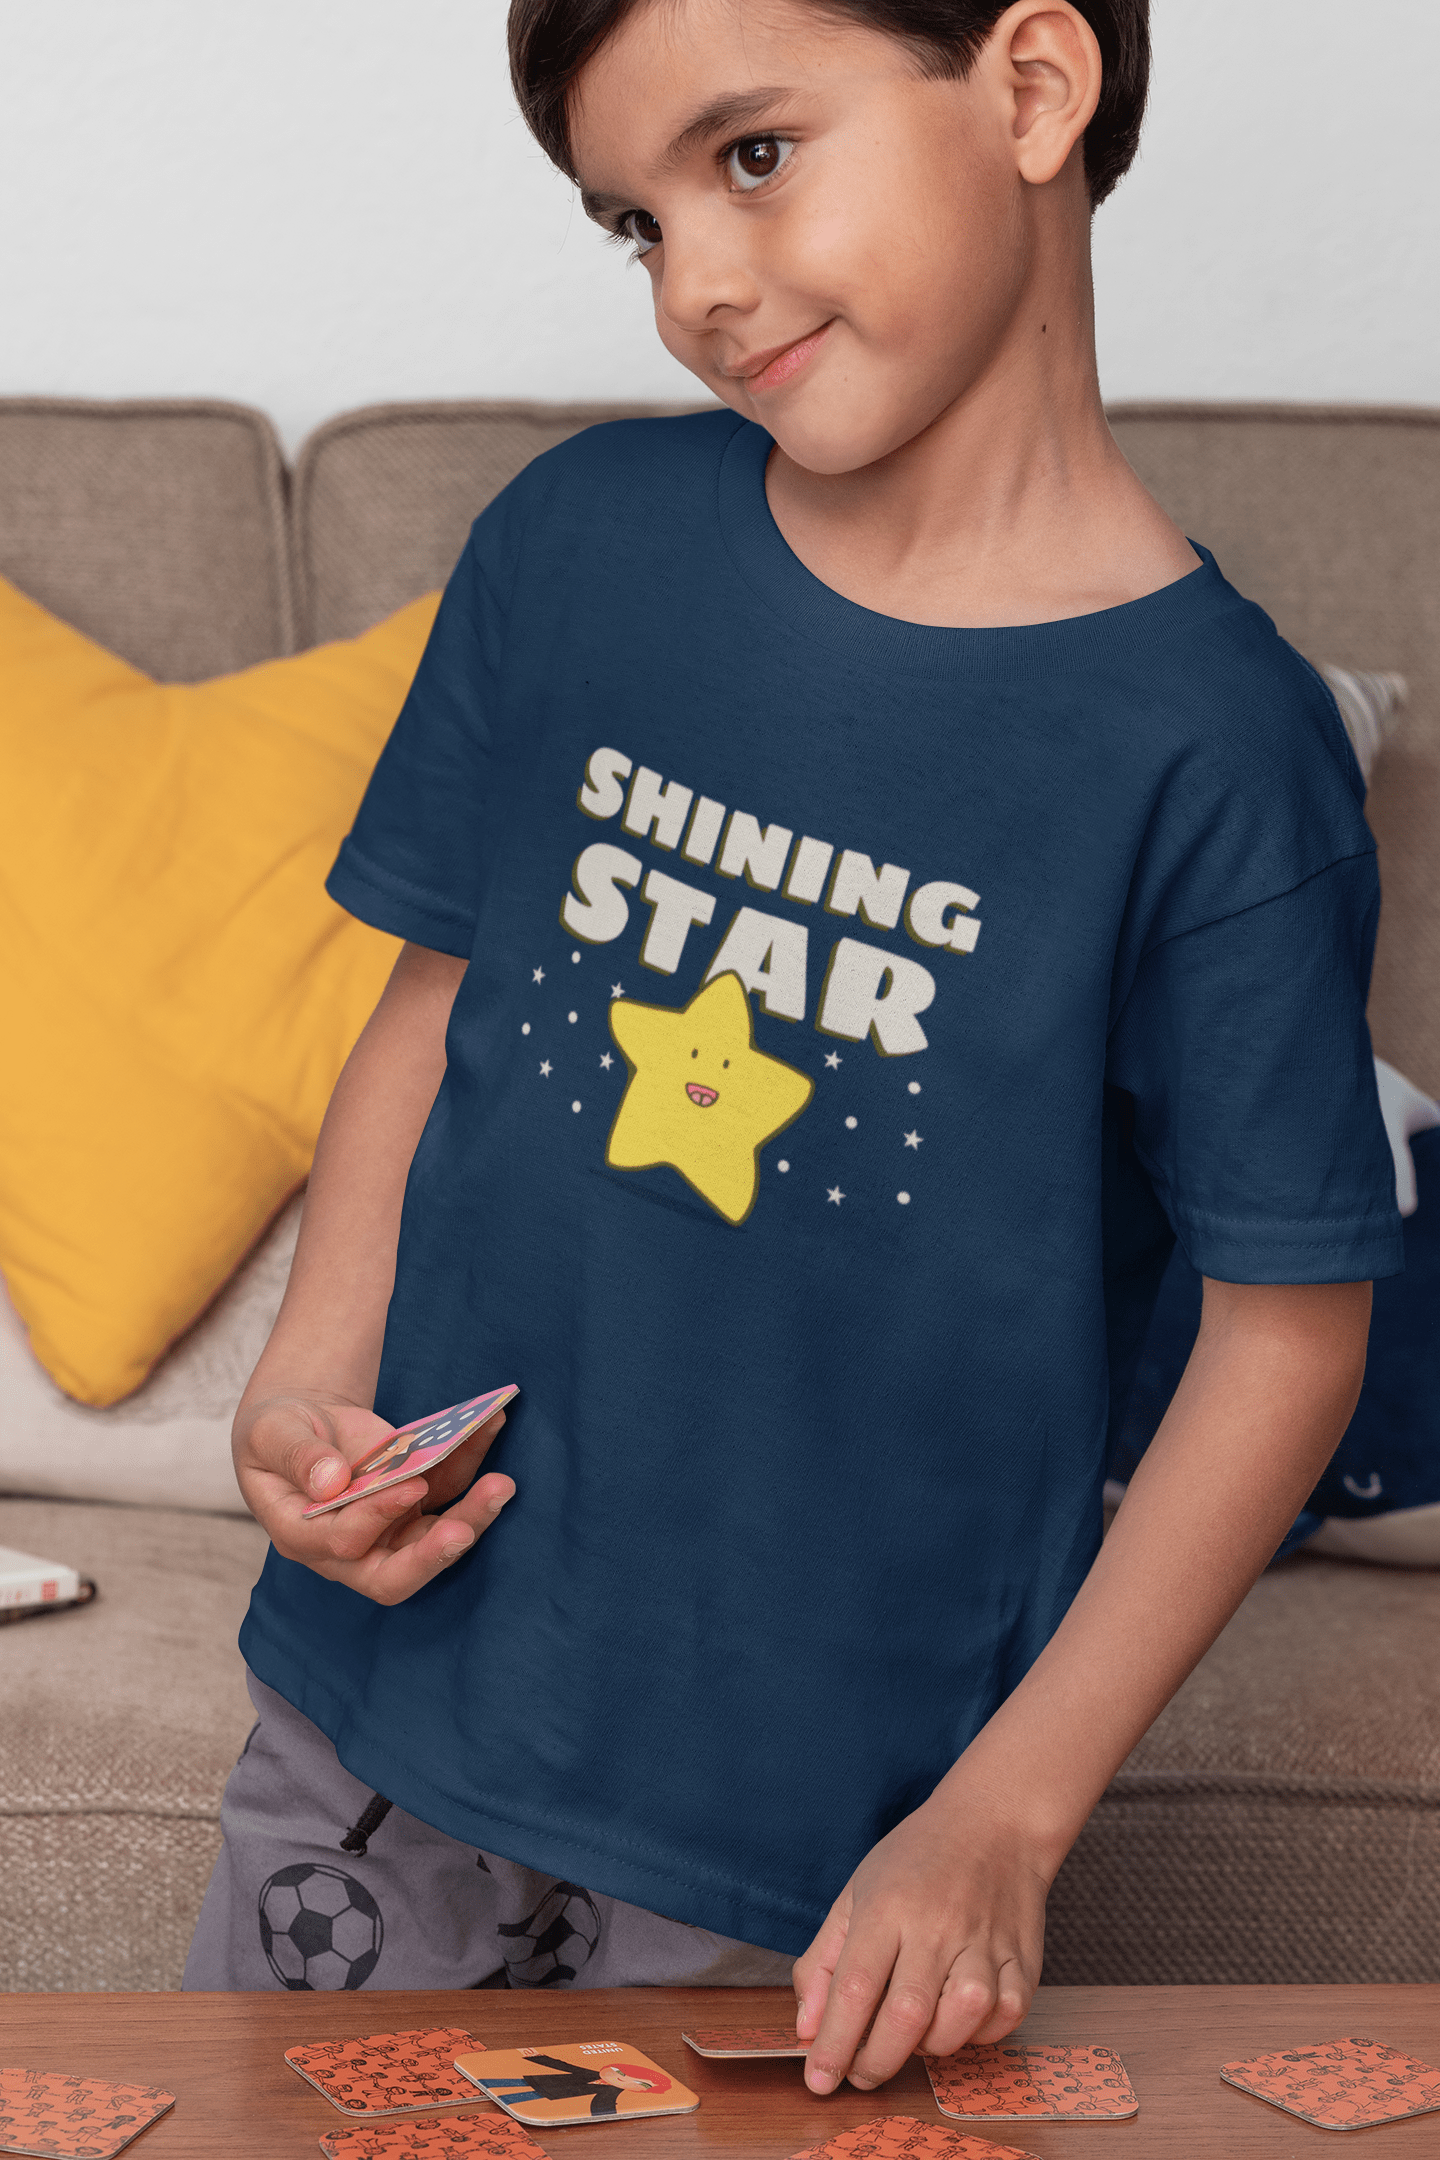 "SHINING STAR" KIDS HALF-SLEEVE T-SHIRT NAVY BLUE